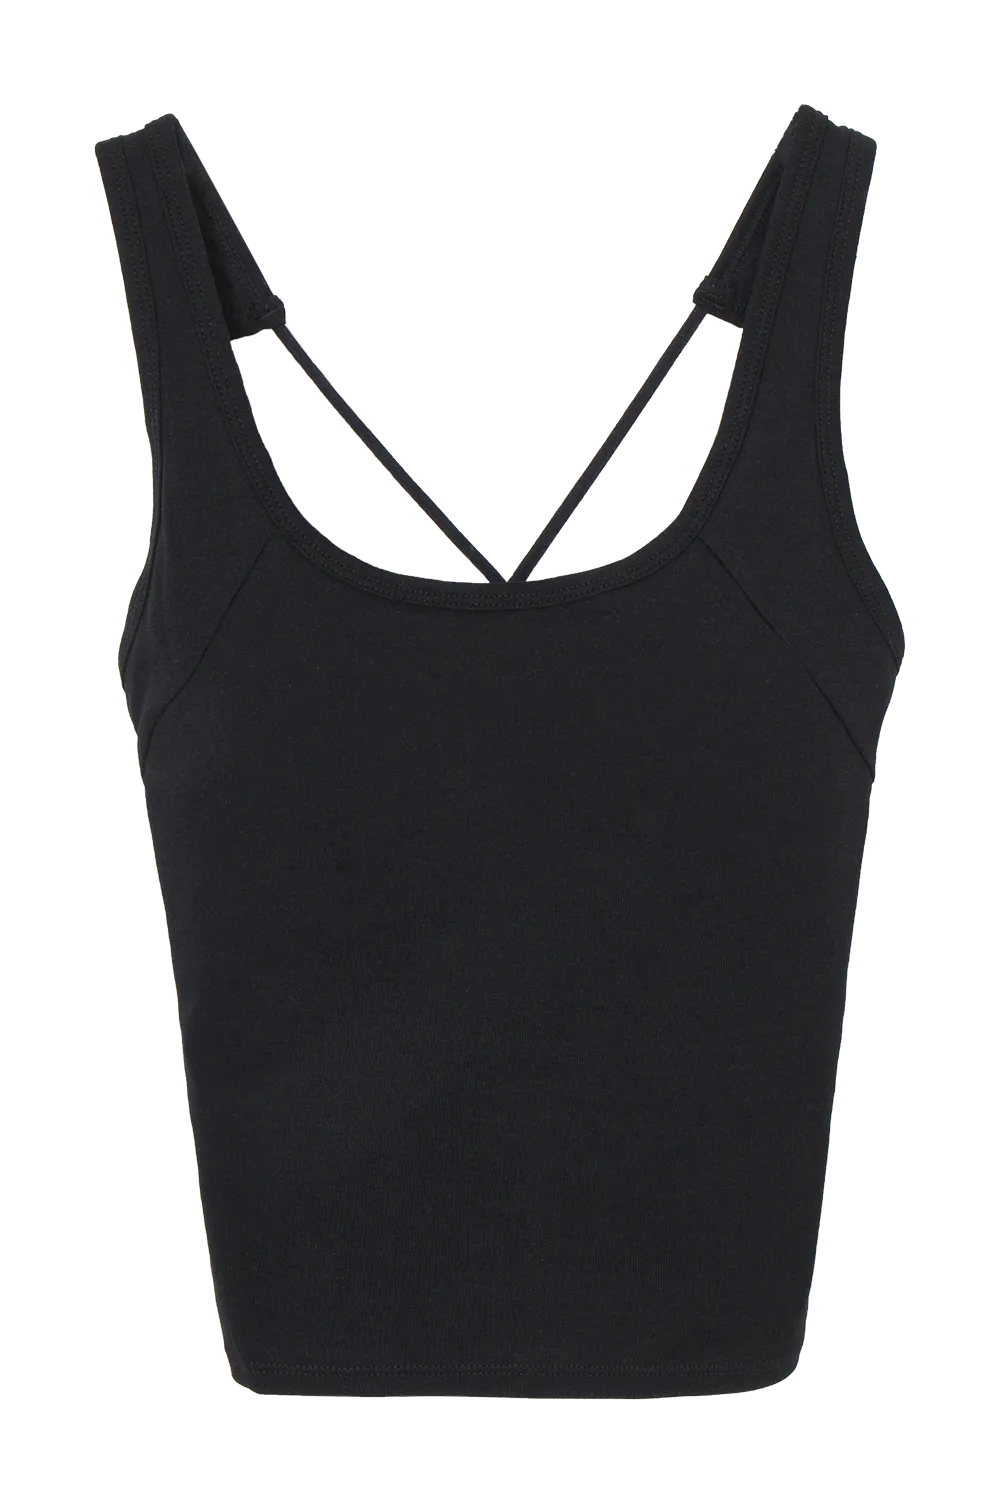 Women's Basic Sleeveless Tank Top